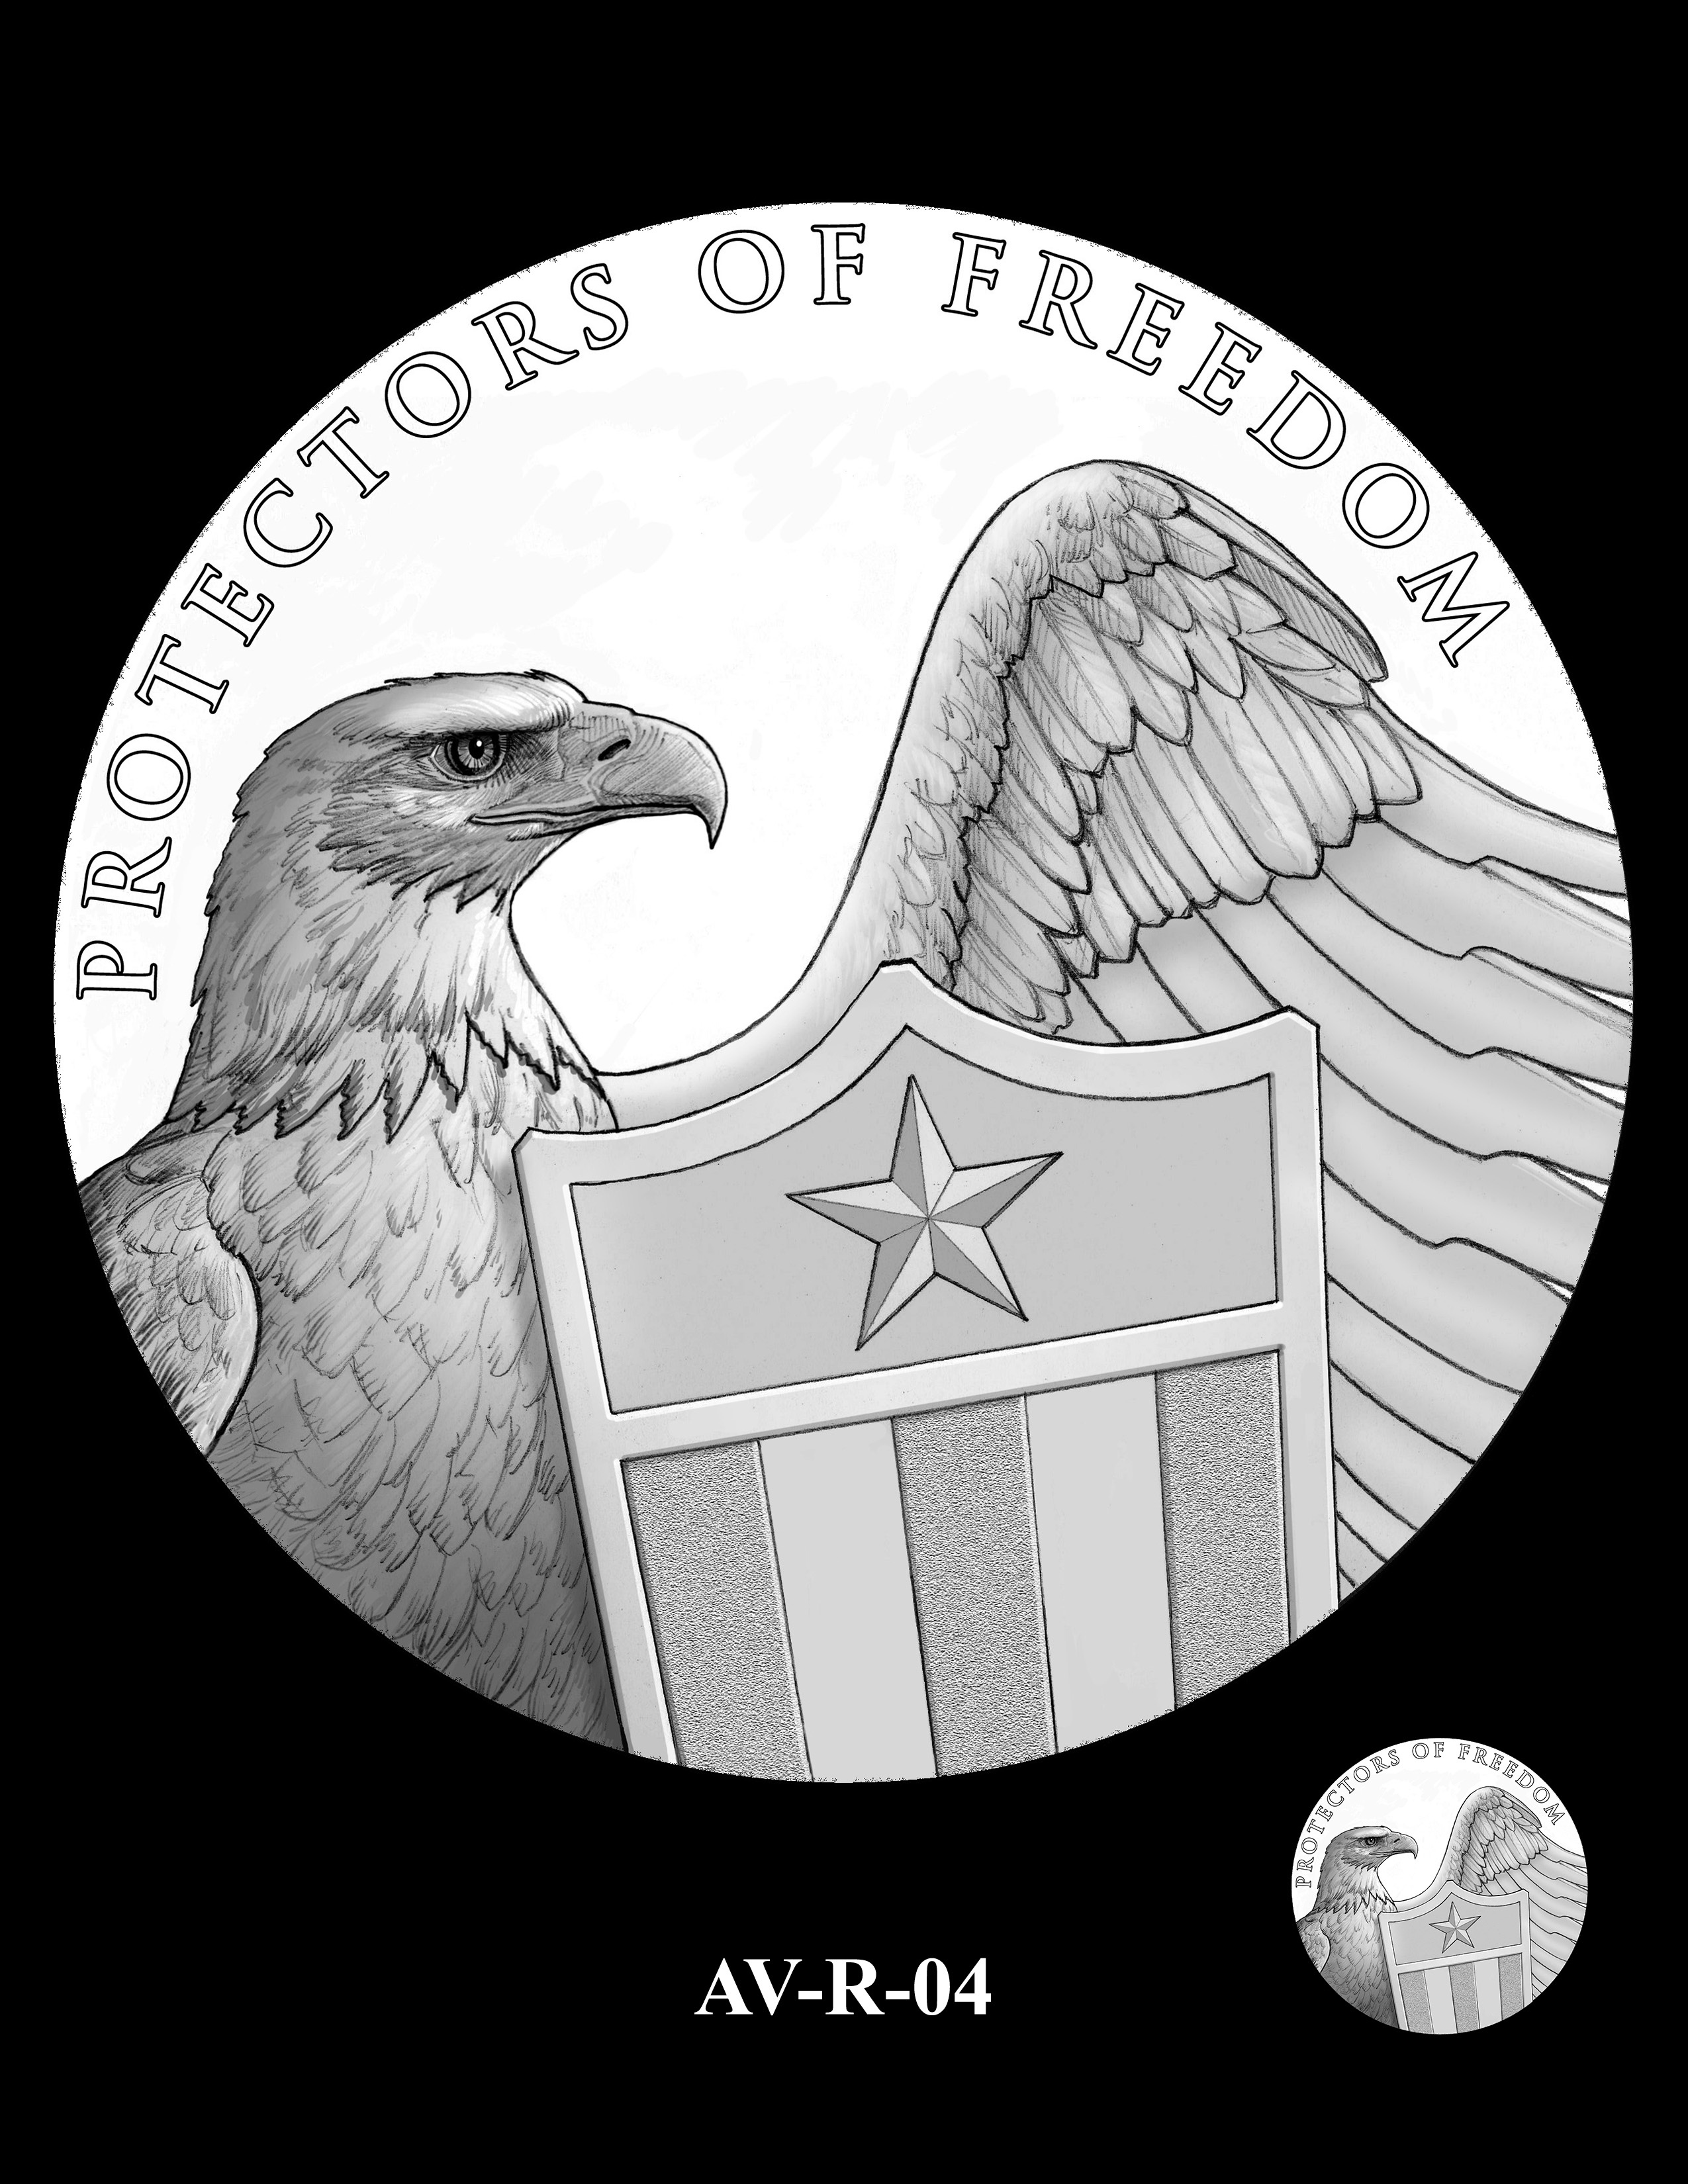 AV-R-04 - American Veterans Medal